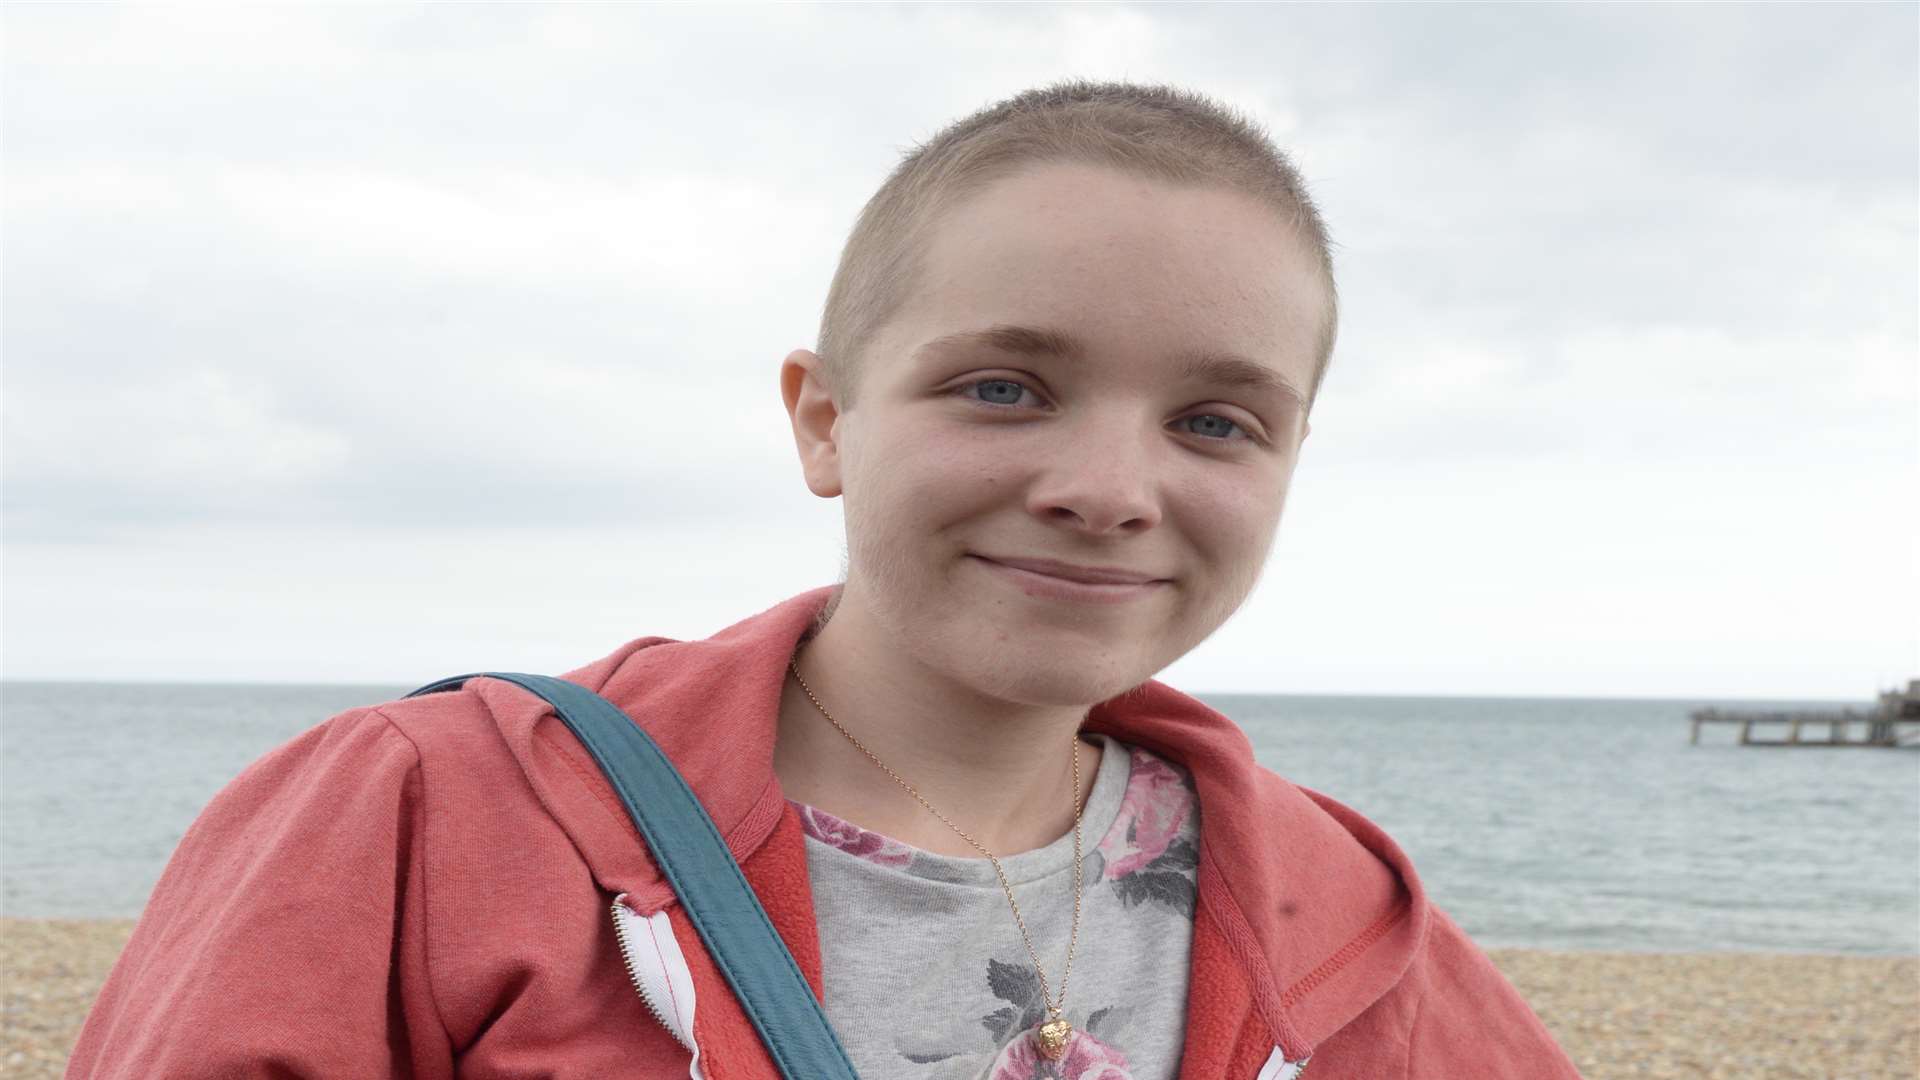 Teenage cancer sufferer Kelly Turner